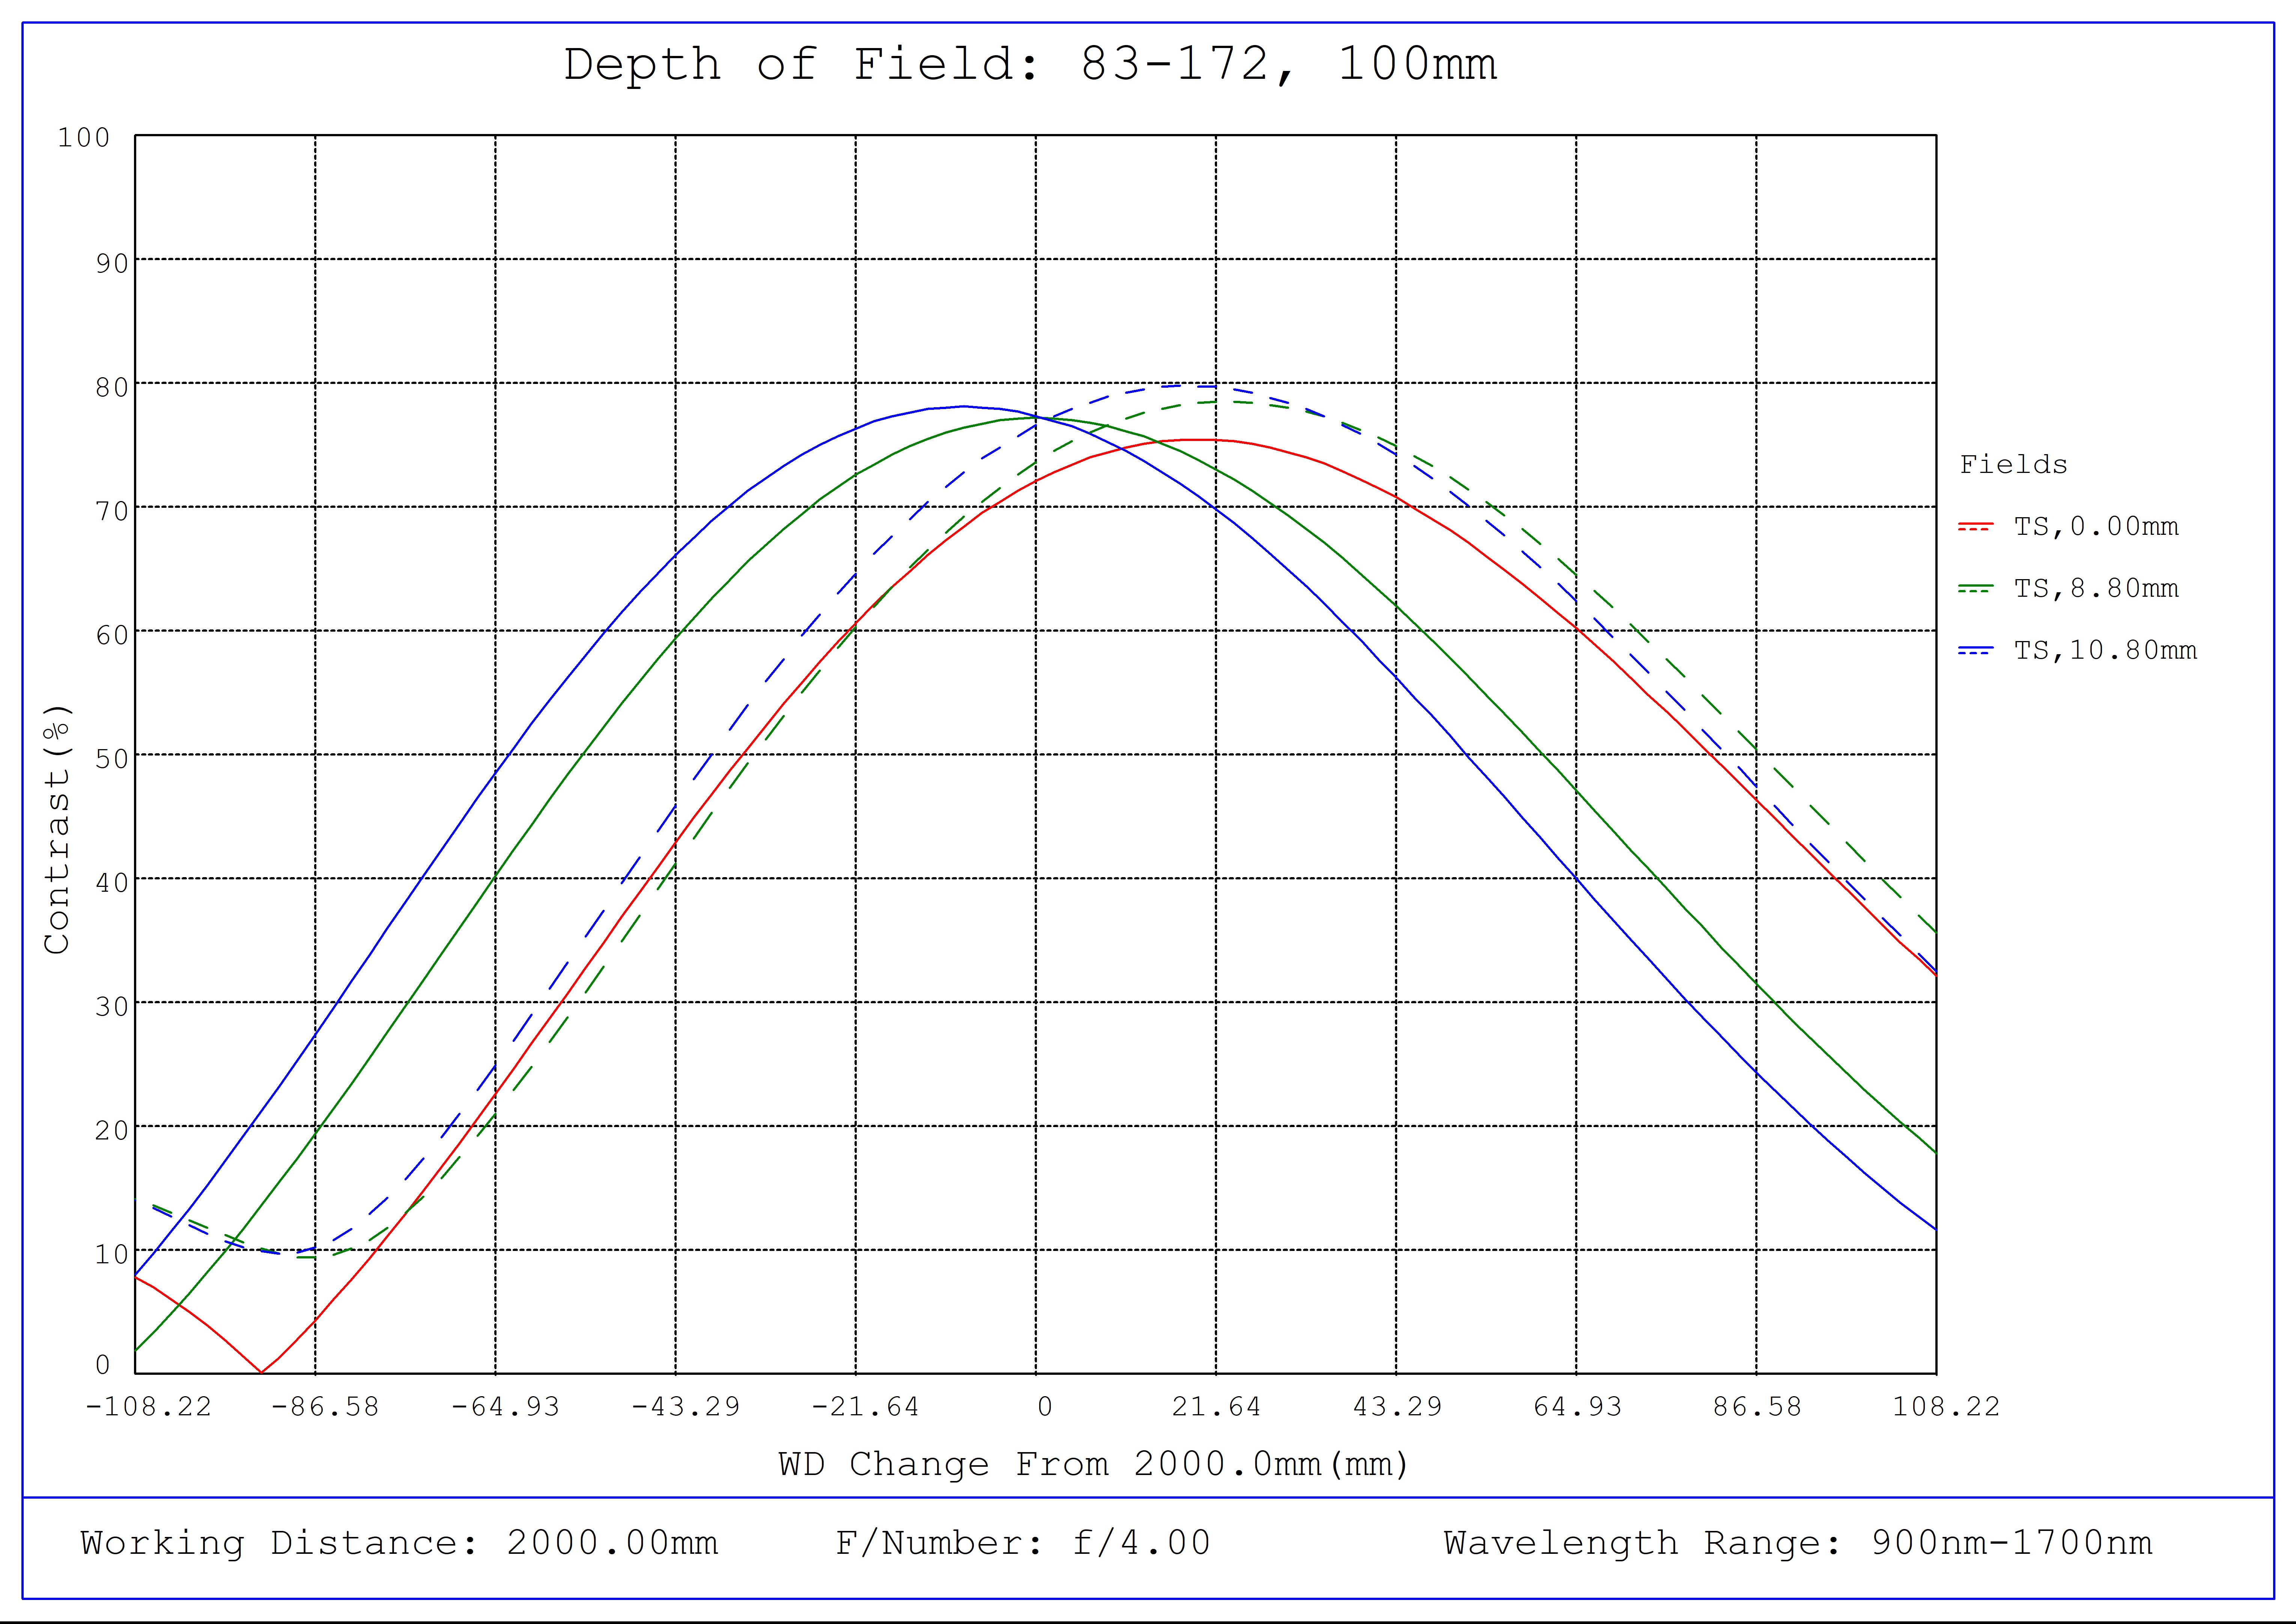 #83-172, 100mm SWIR Series Fixed Focal Length Lens, M42 x 1.0, Depth of Field Plot, 2000mm Working Distance, f4